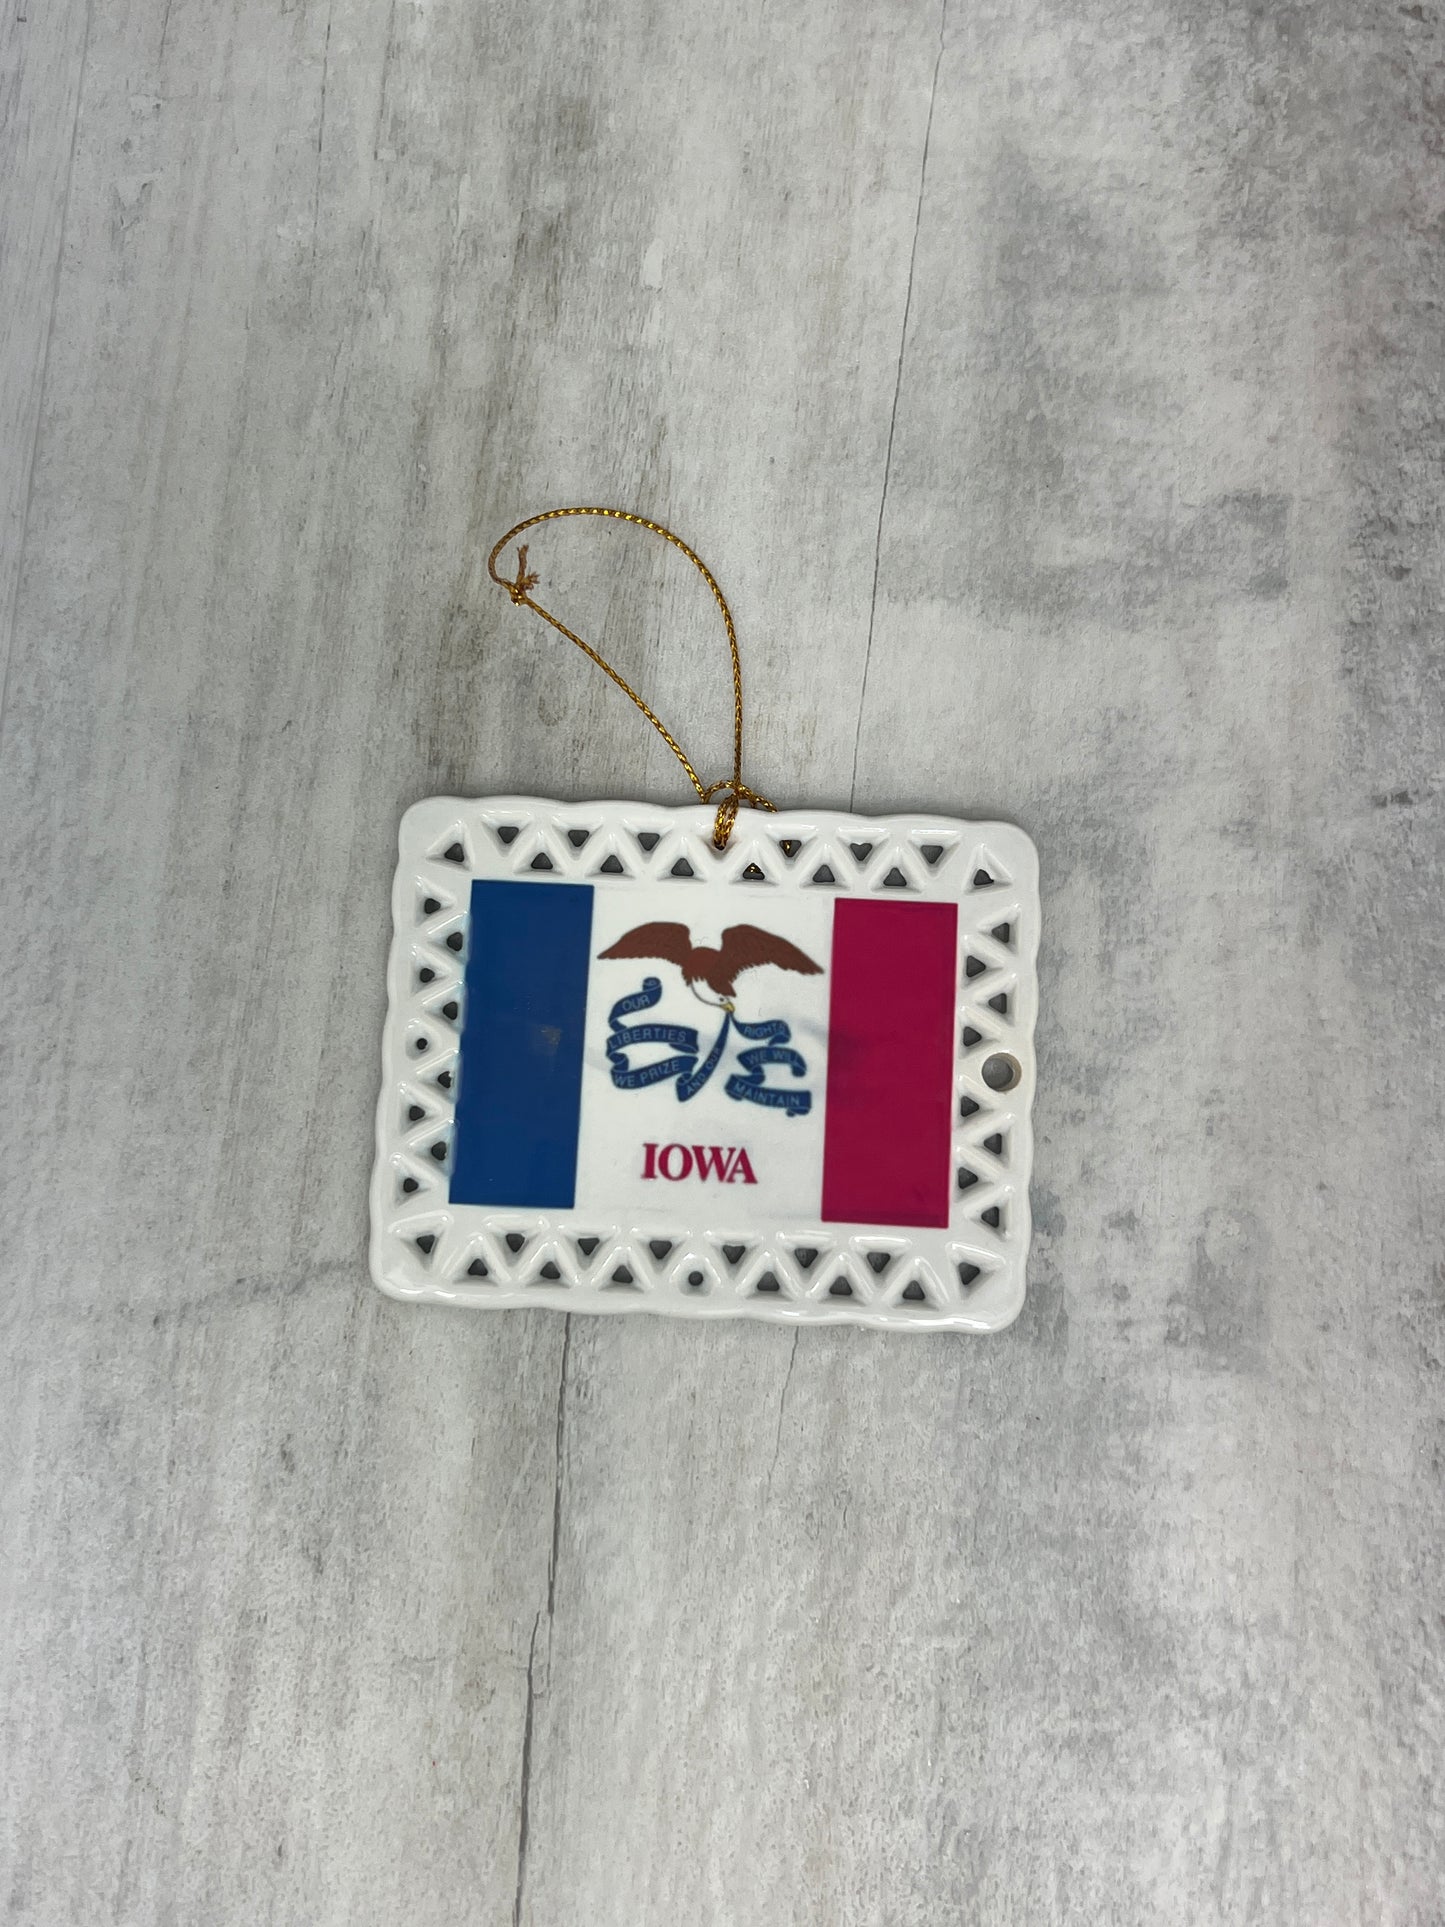 Iowa Ceramic Flag Ornaments